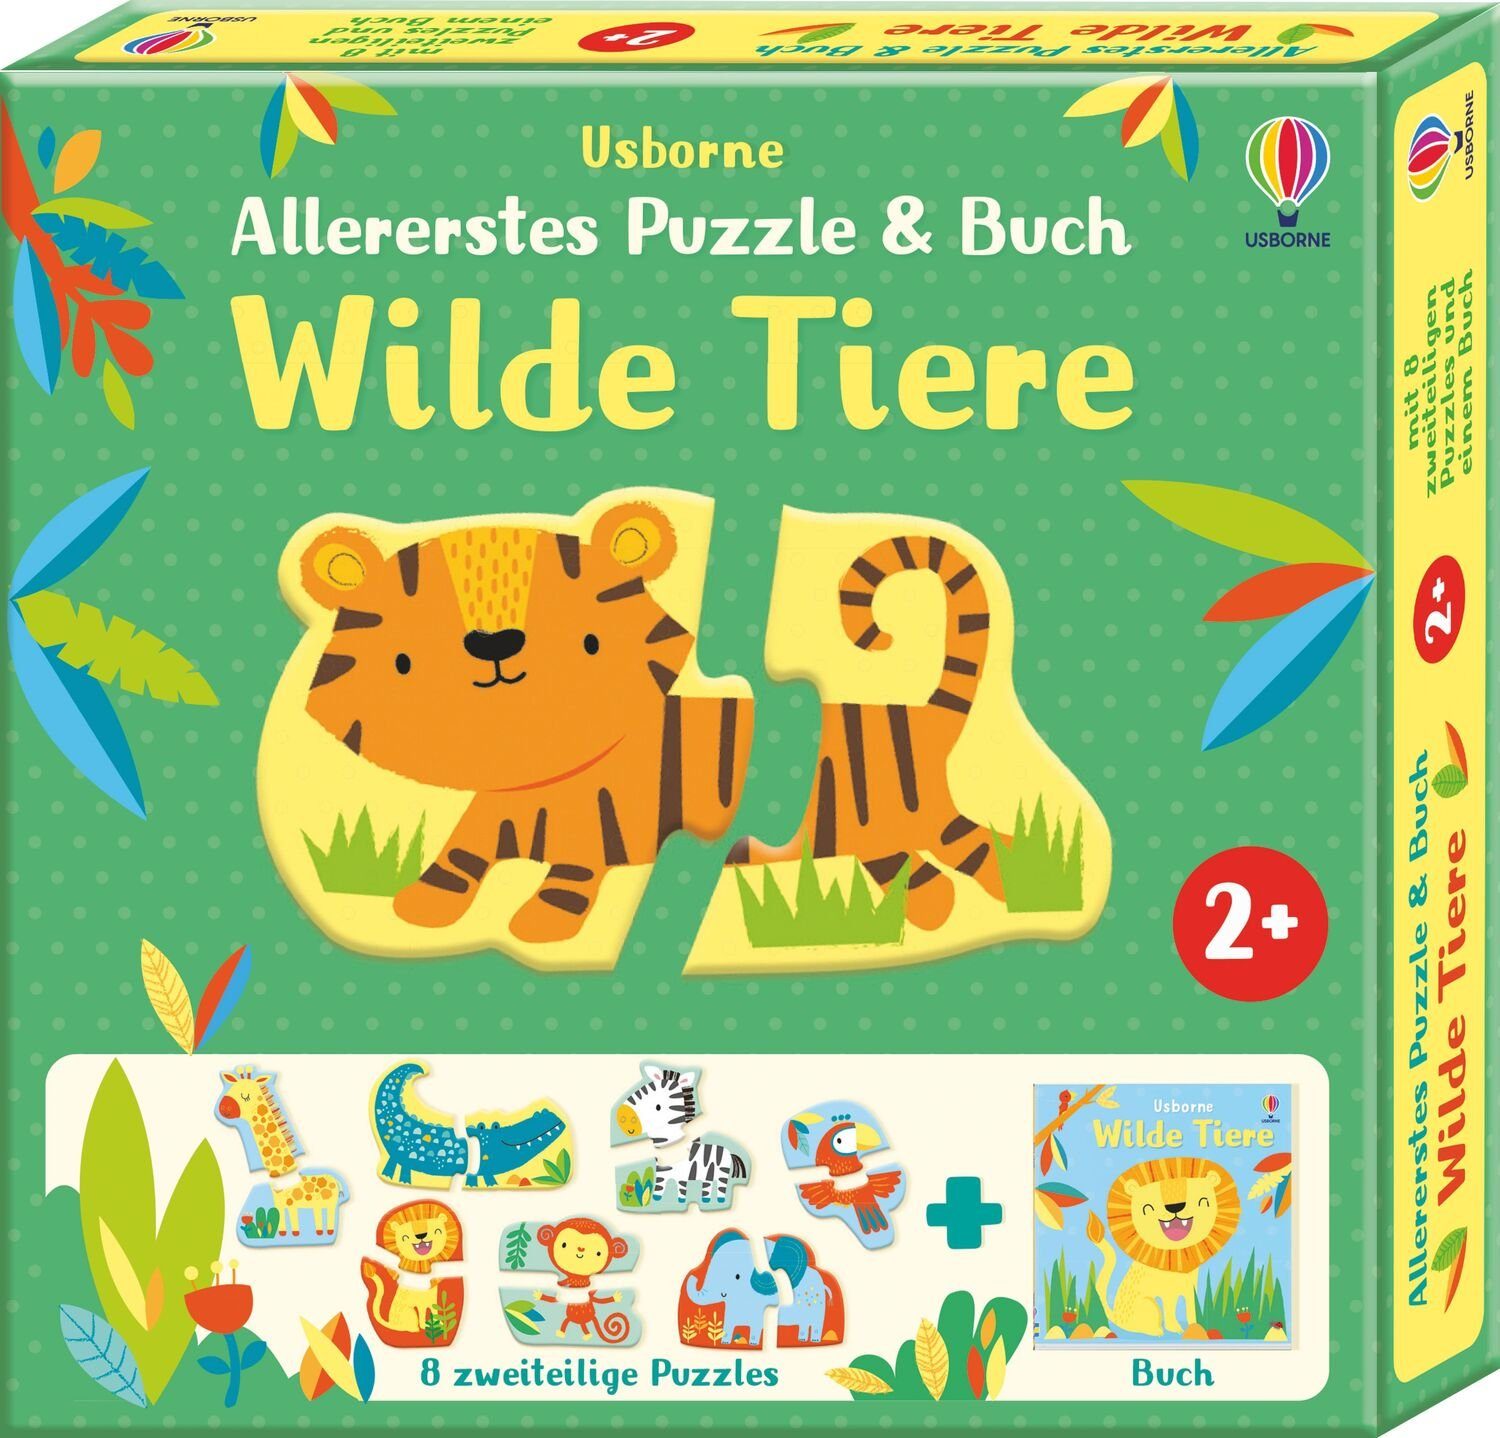 Puzzle Tiere, Buch: Verlag Allererstes Puzzleteile & Wilde Puzzle Usborne